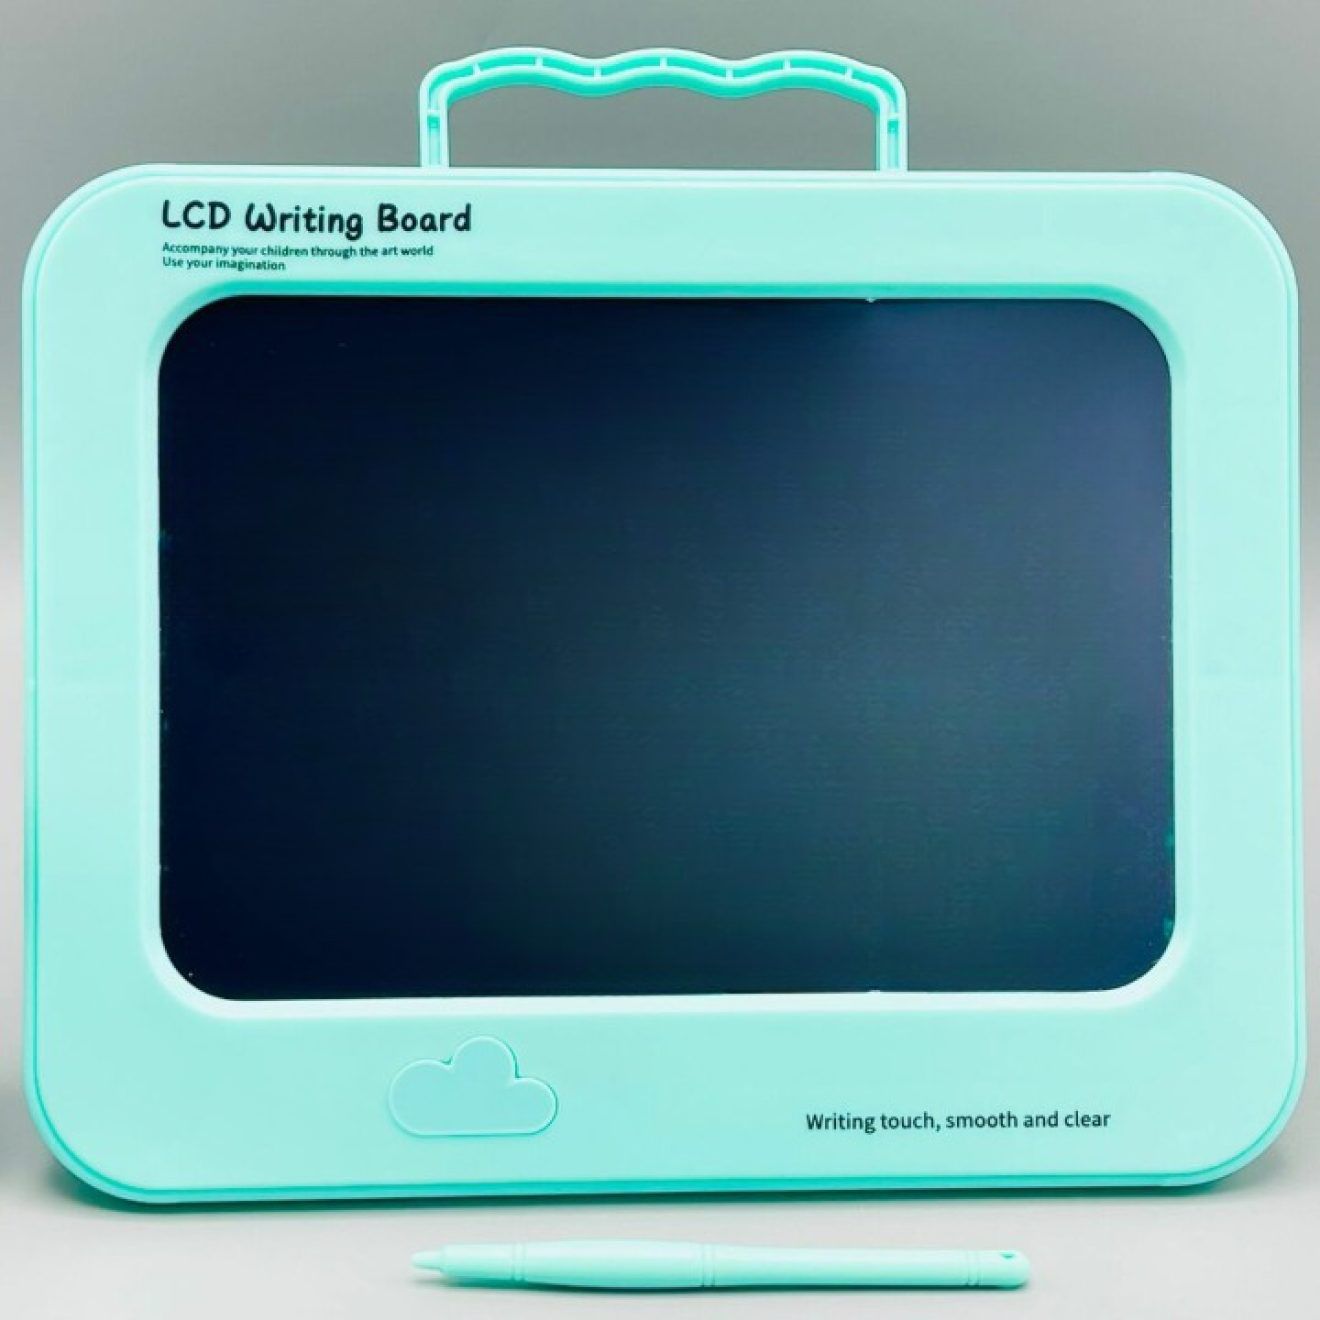 9” LCD Panel Writing Pad